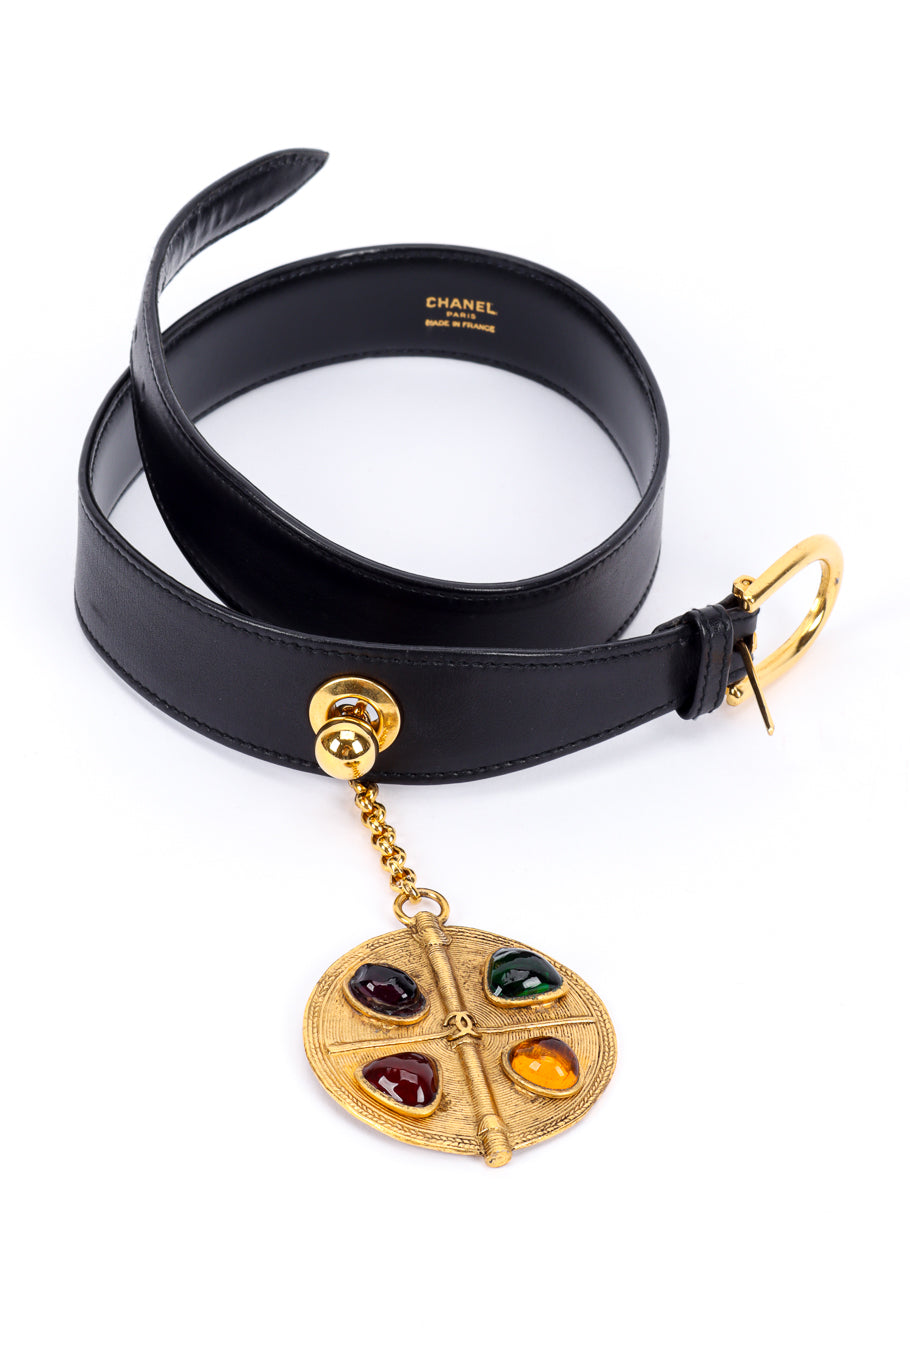 Chanel Gripoix Medallion Leather Belt front @recessla